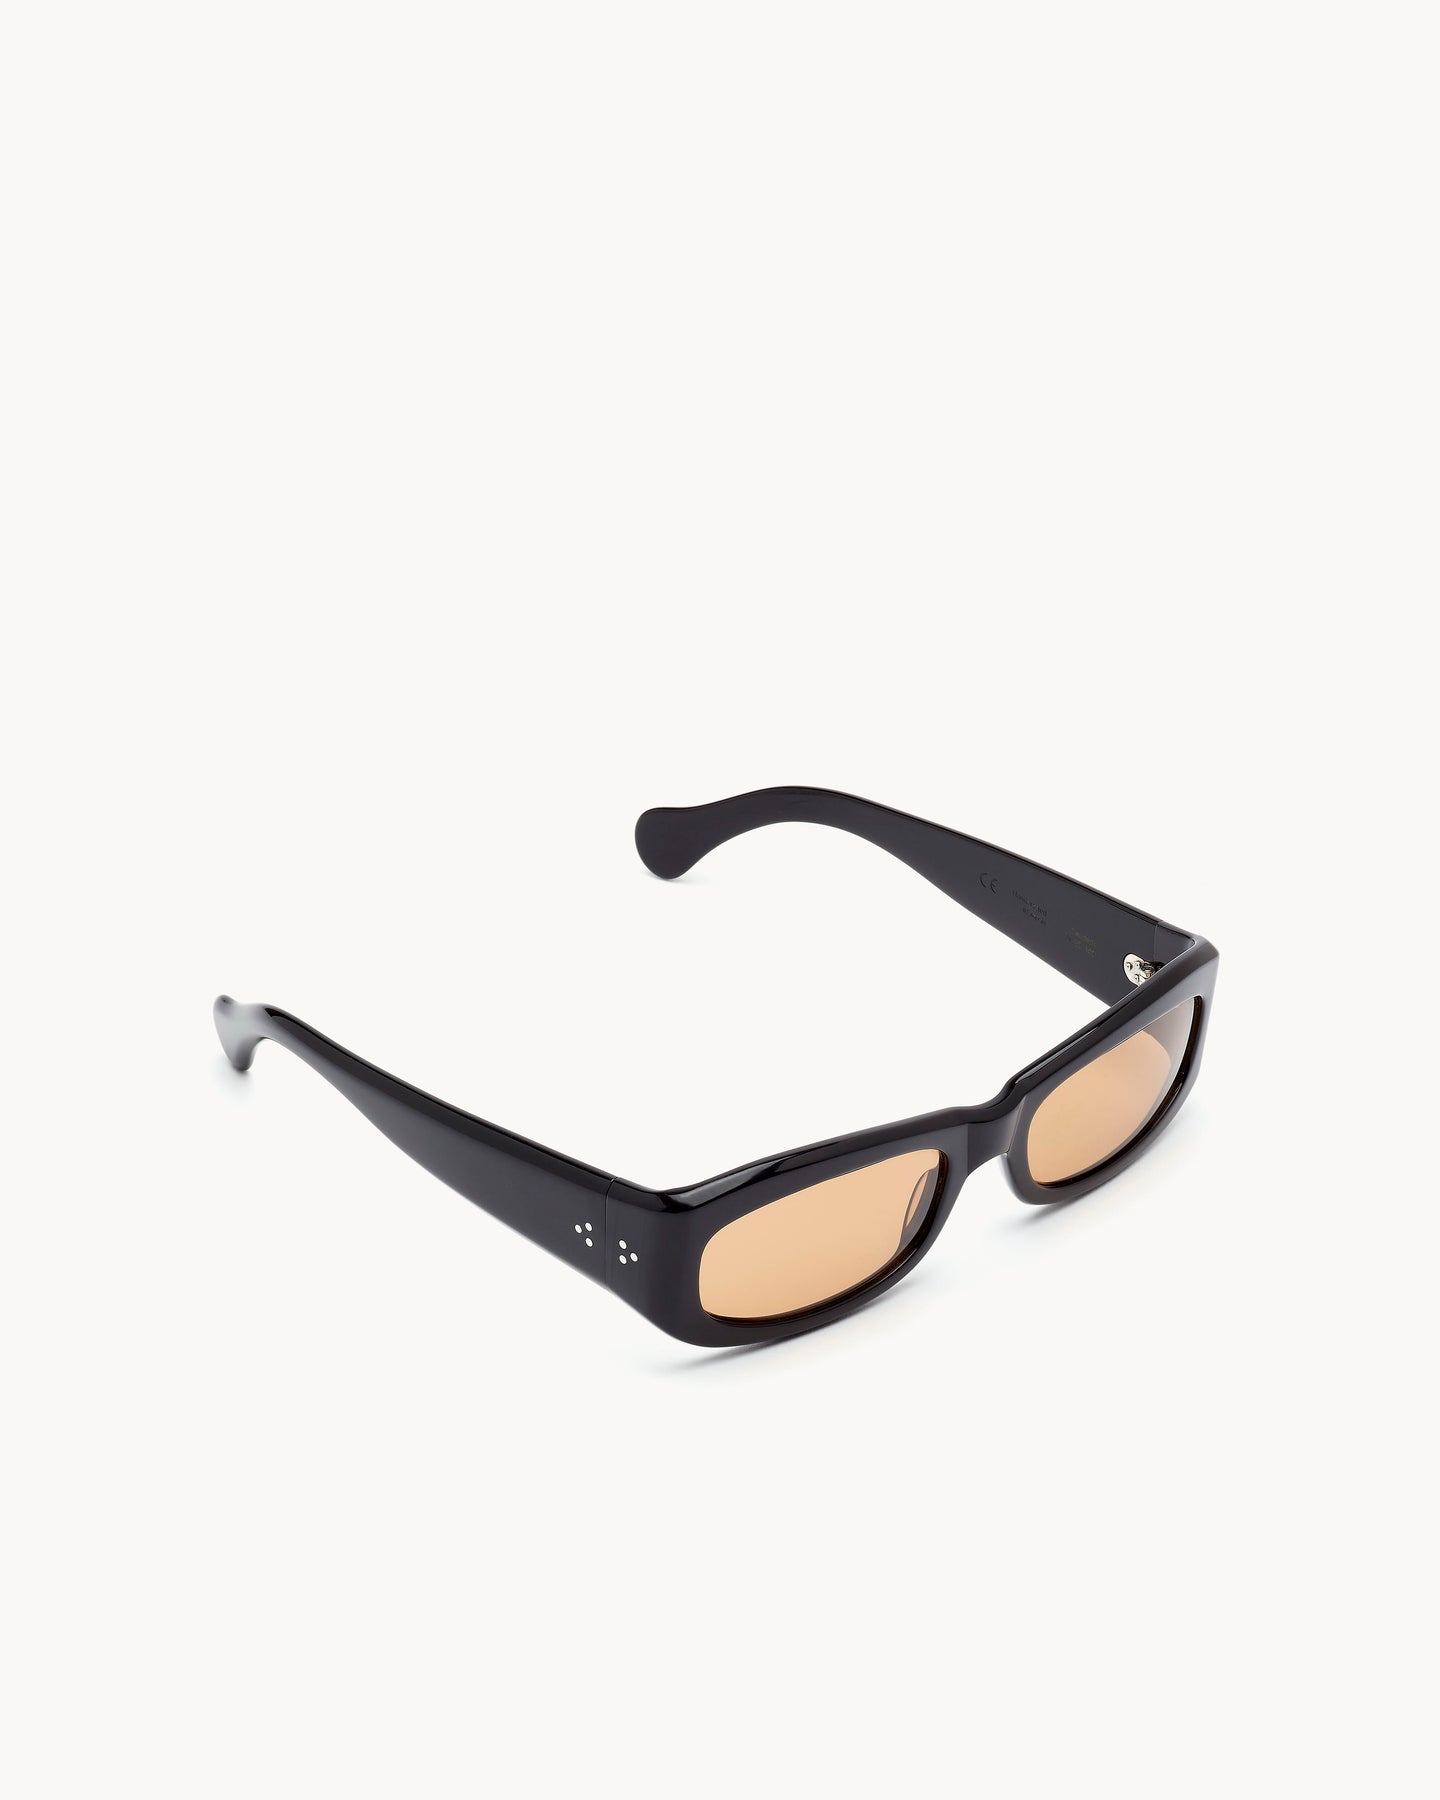 Port Tanger Saudade Sunglasses in Black Acetate and Cognac Lenses 2